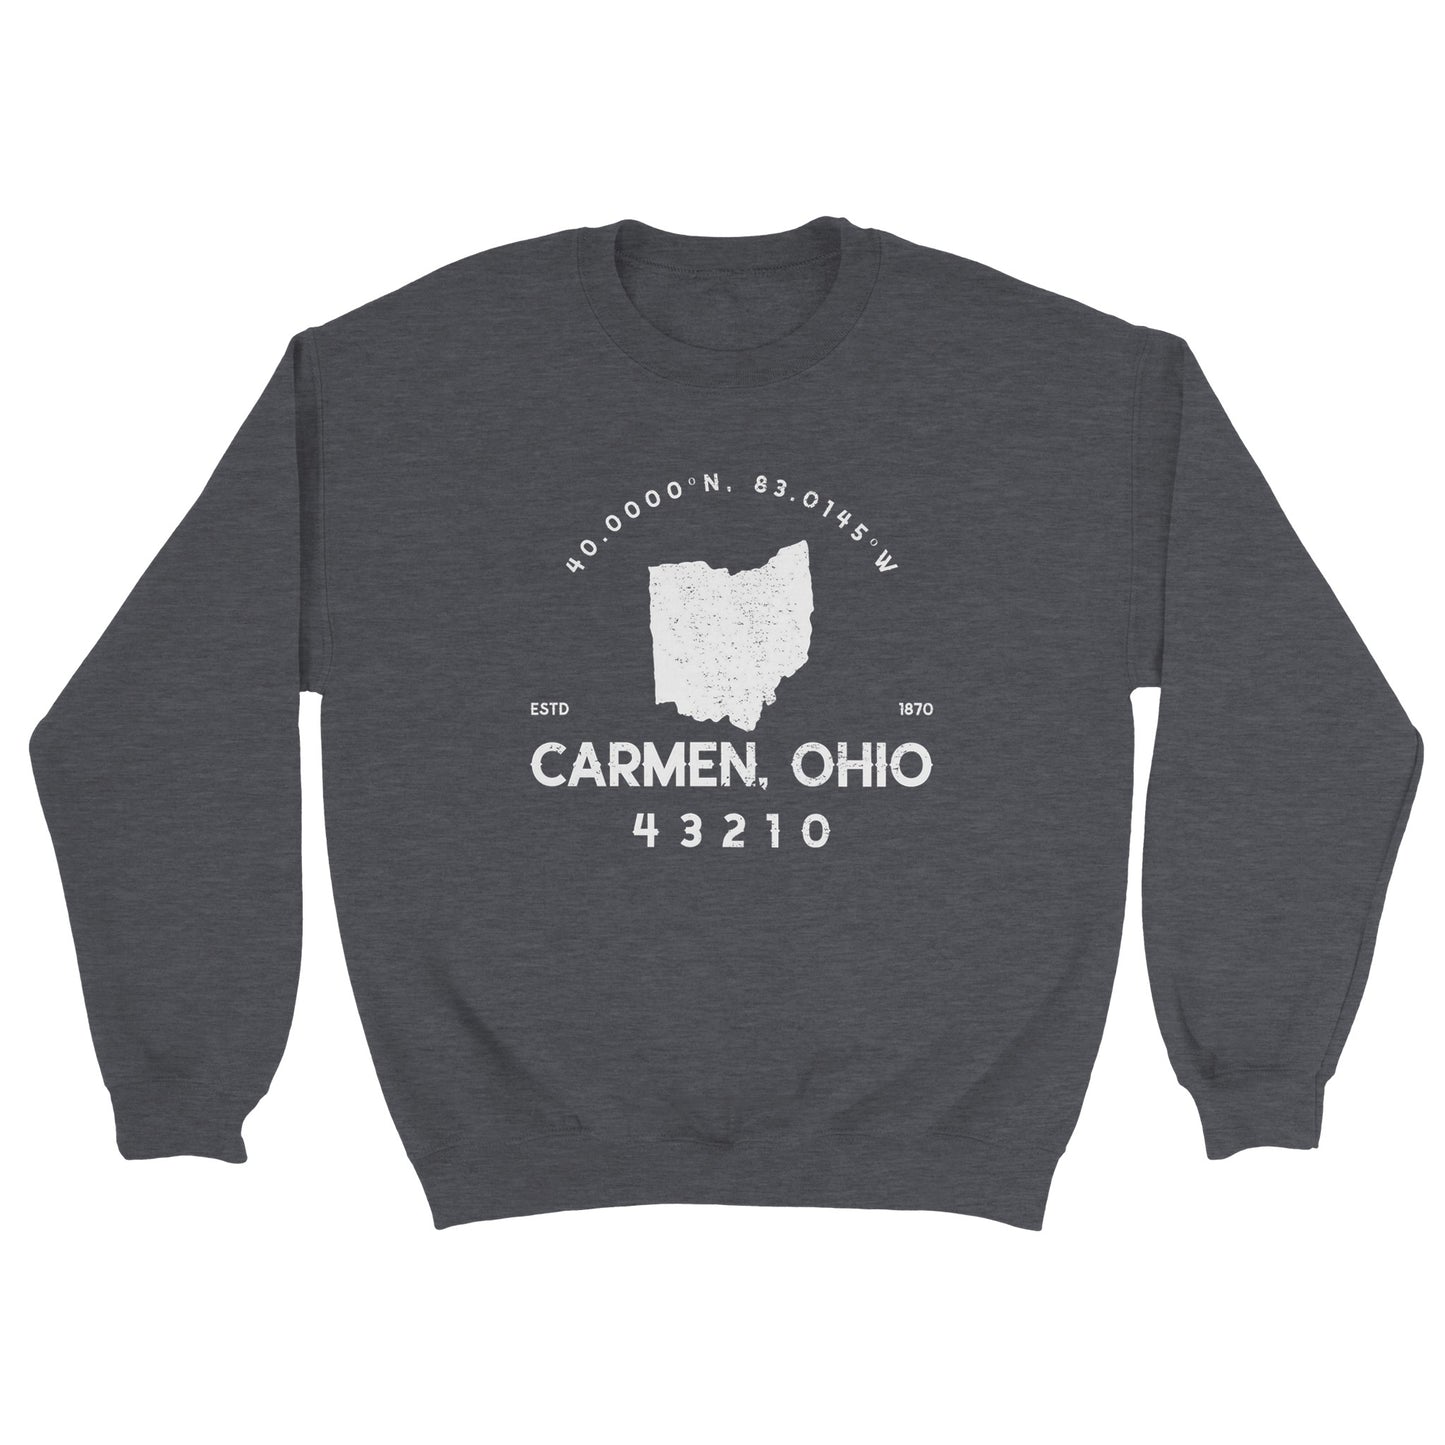 Carmen Ohio Logo Design on Classic Unisex Crewneck Sweatshirt